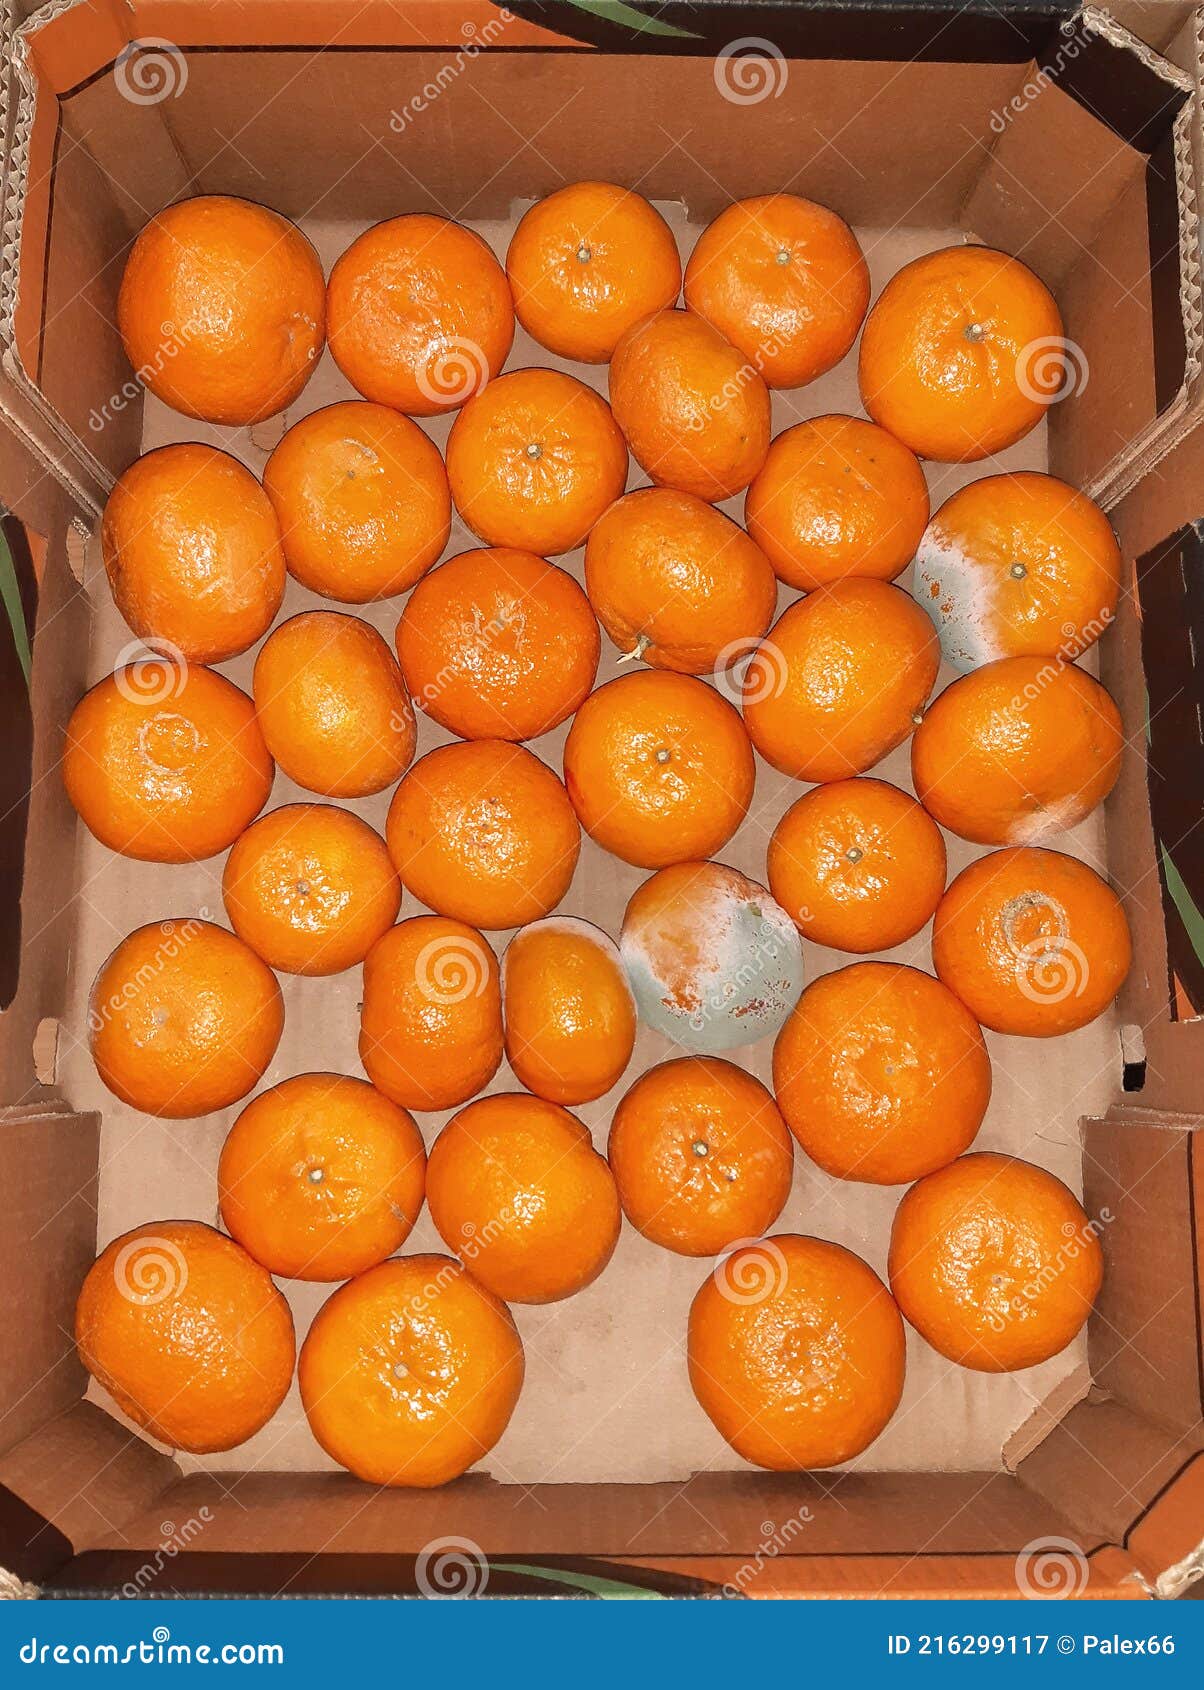 ripe citrus fruits in cardboard boxe